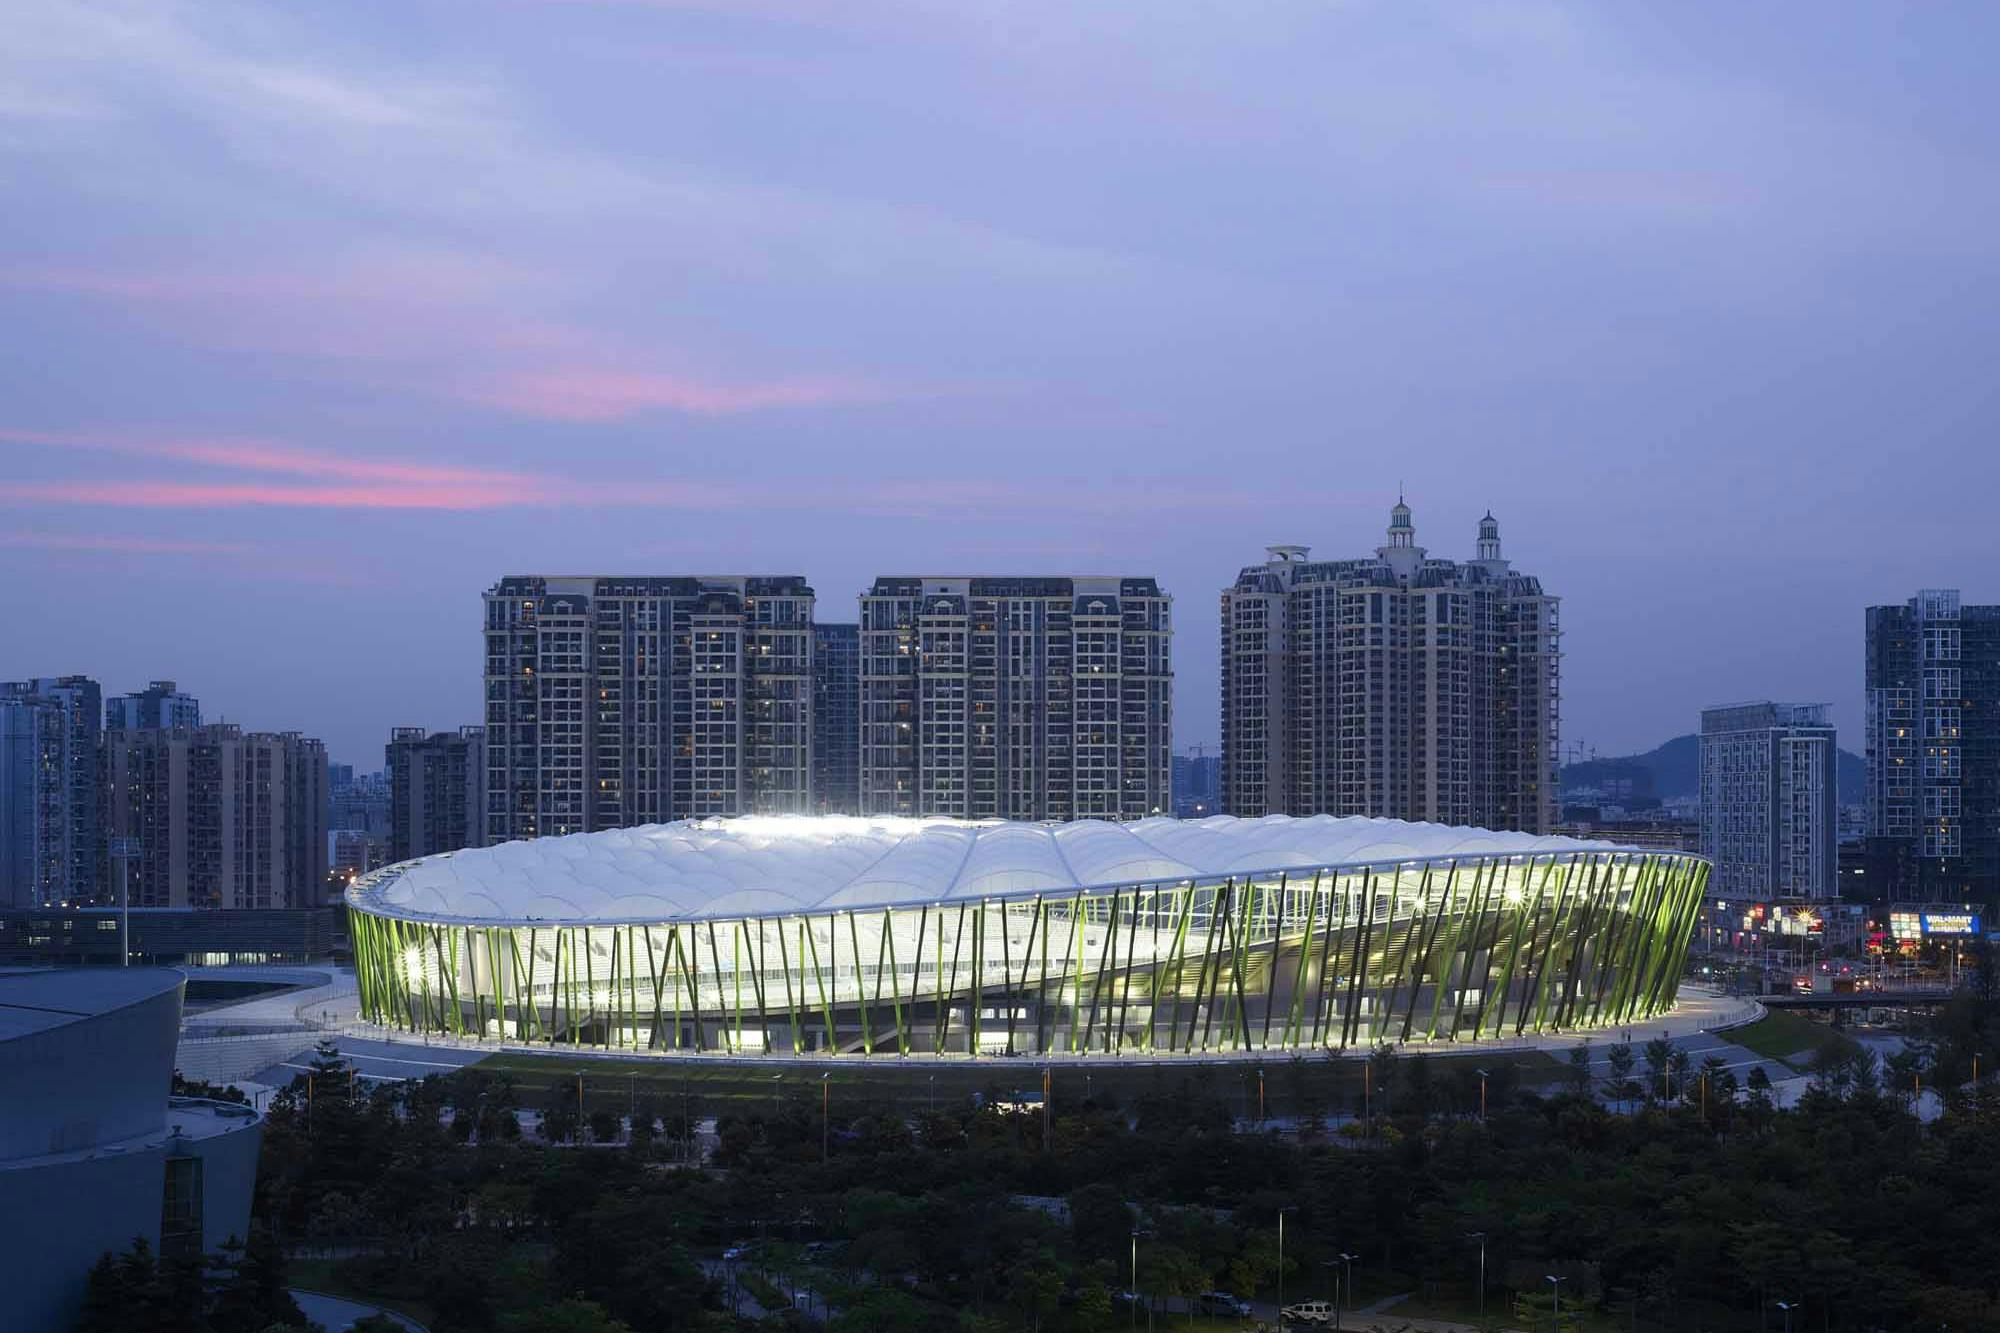 Bao'An Stadion